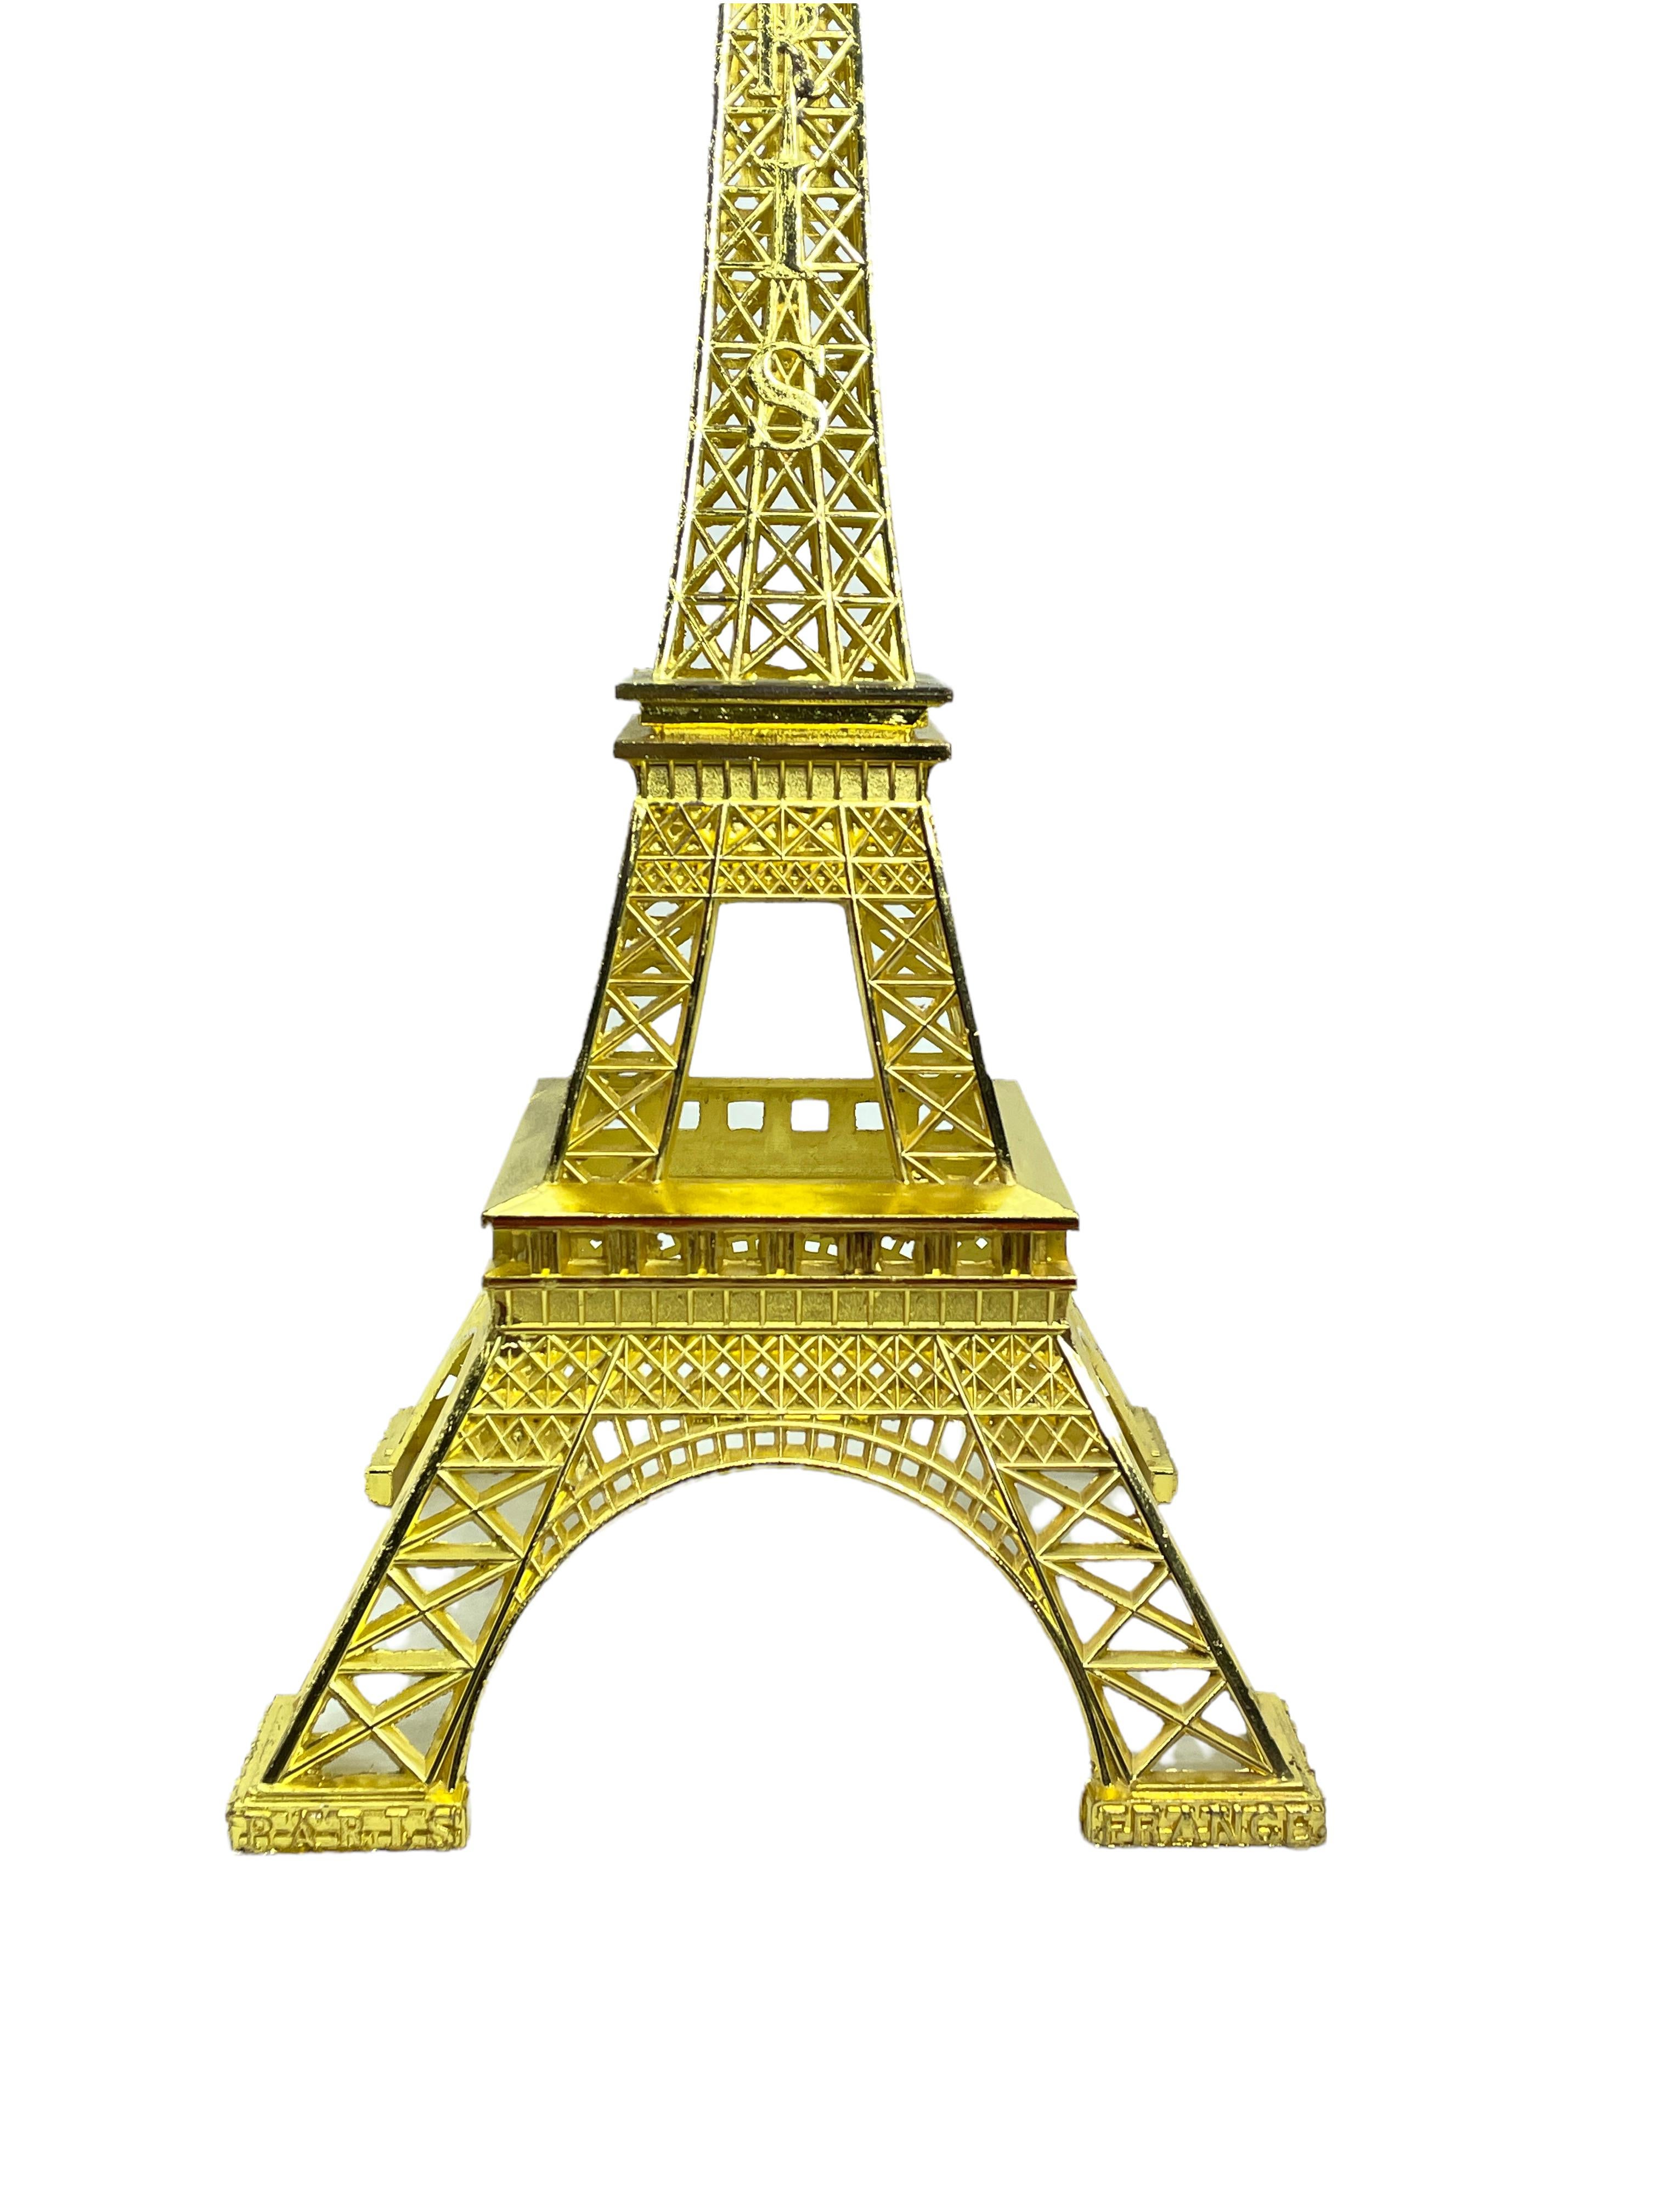 20th Century Modern Paris Eiffel Tower French Souvenir Building Metal, 1980s For Sale